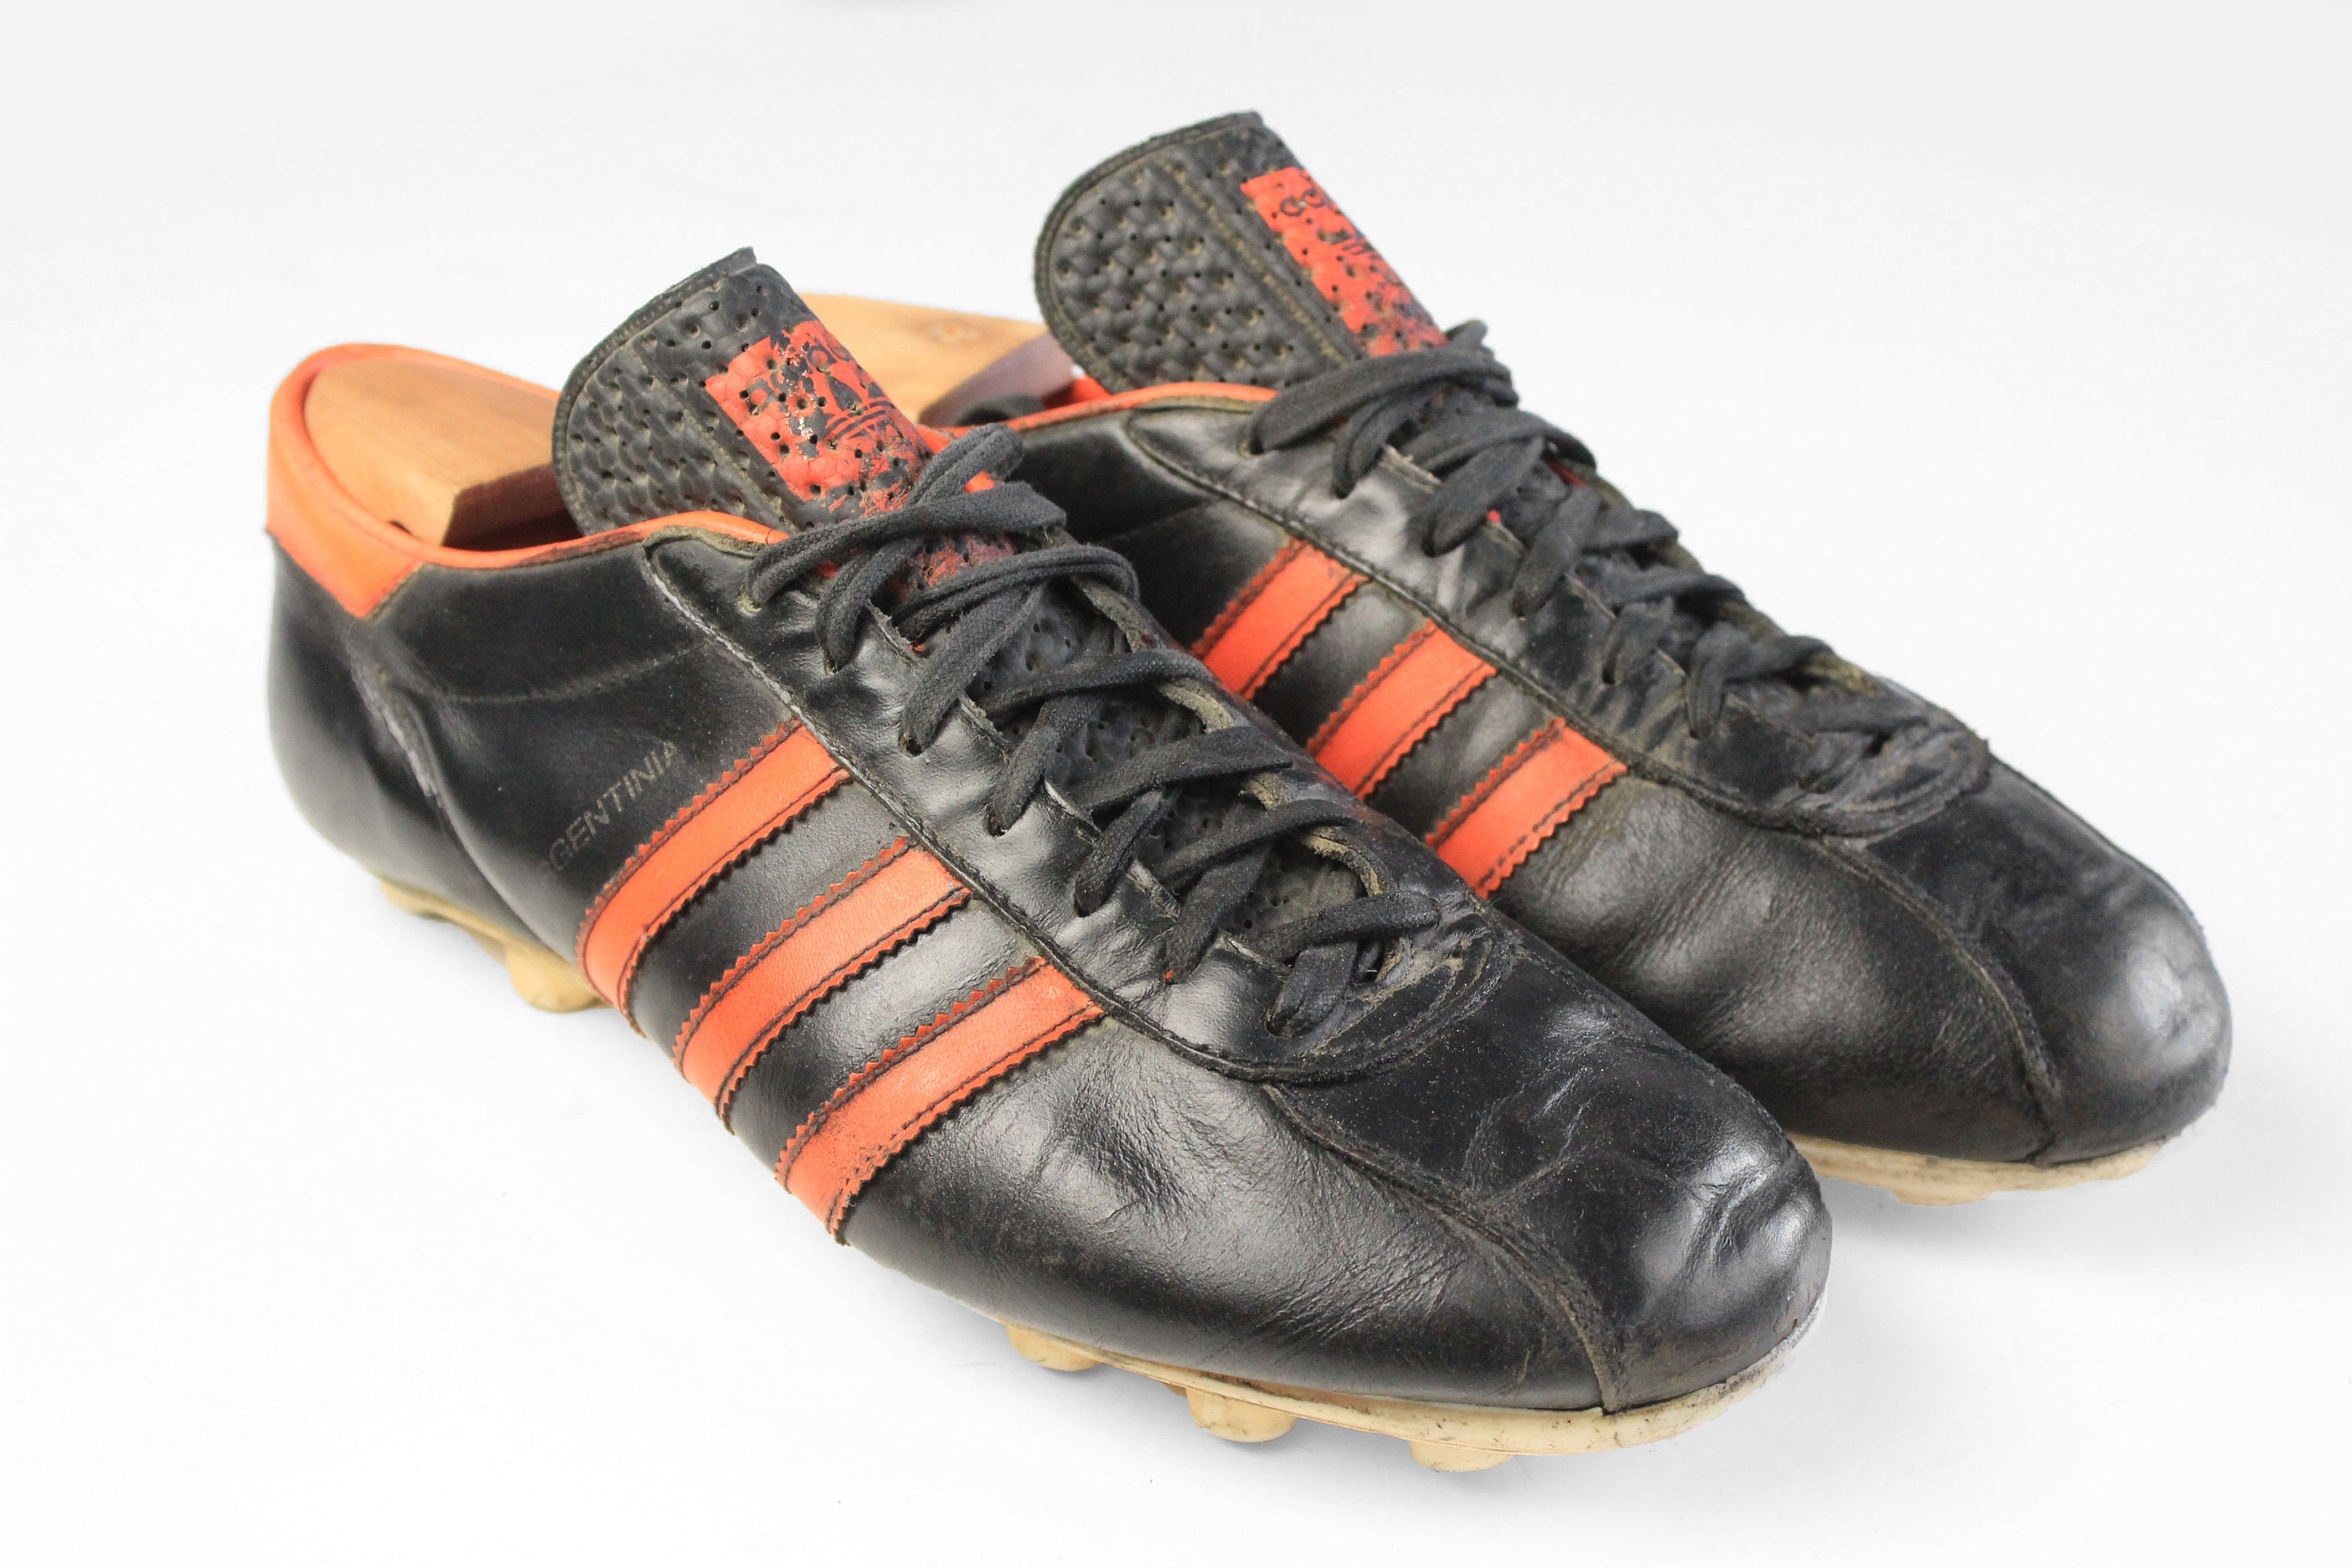 ADIDAS Boots retro football leather - Etsy